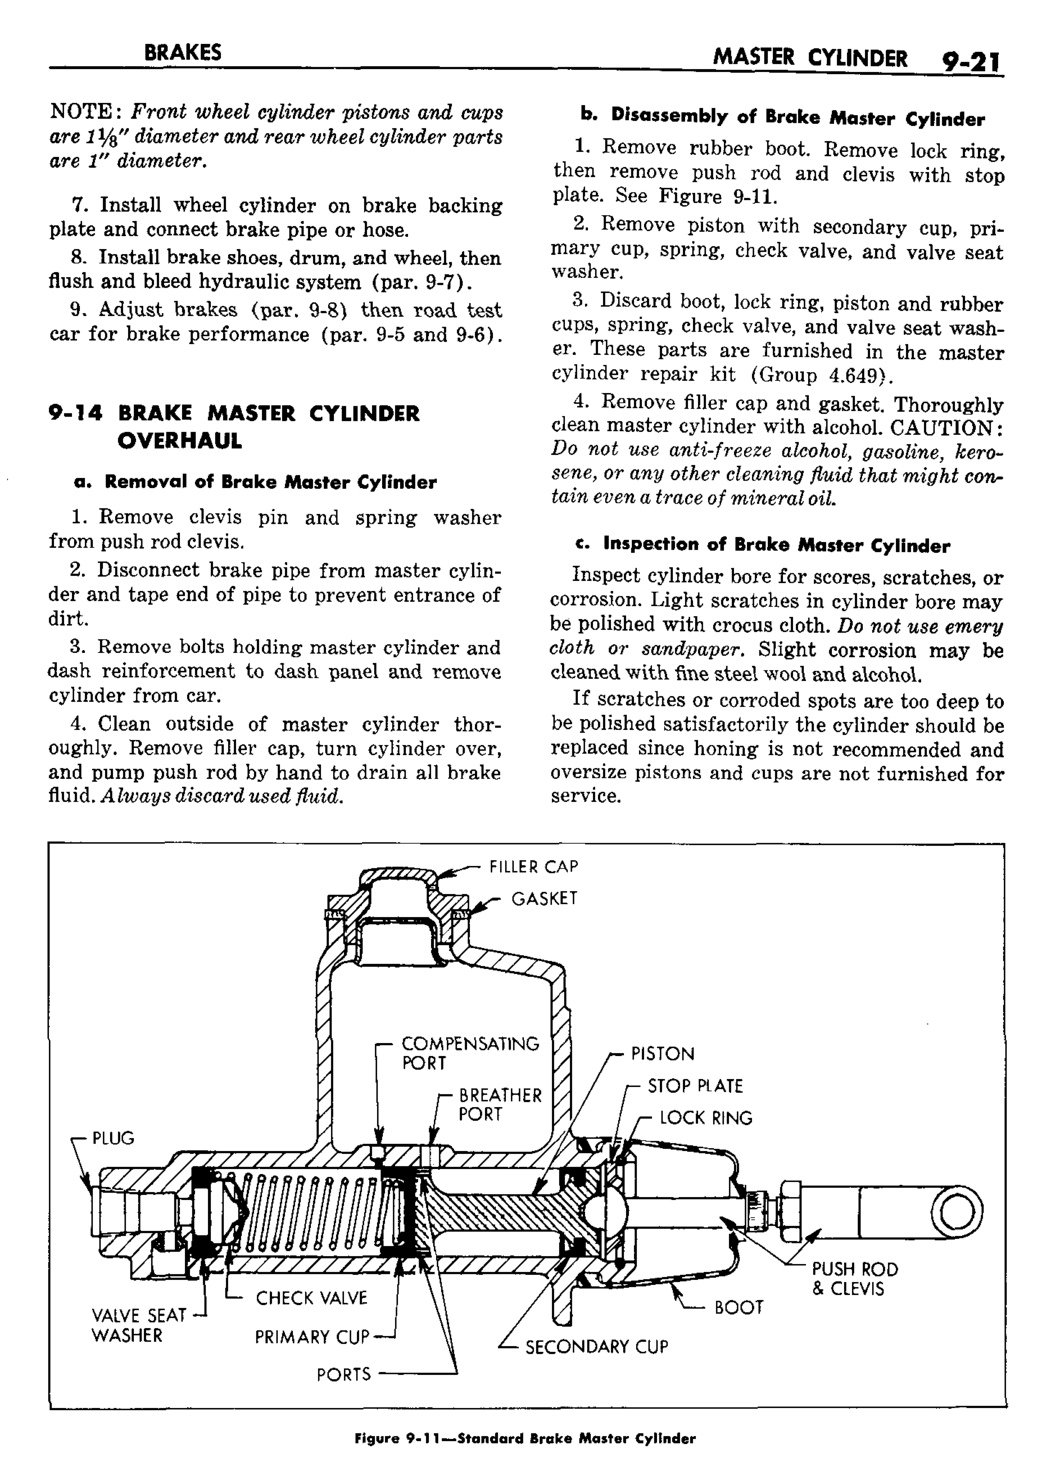 n_10 1959 Buick Shop Manual - Brakes-021-021.jpg